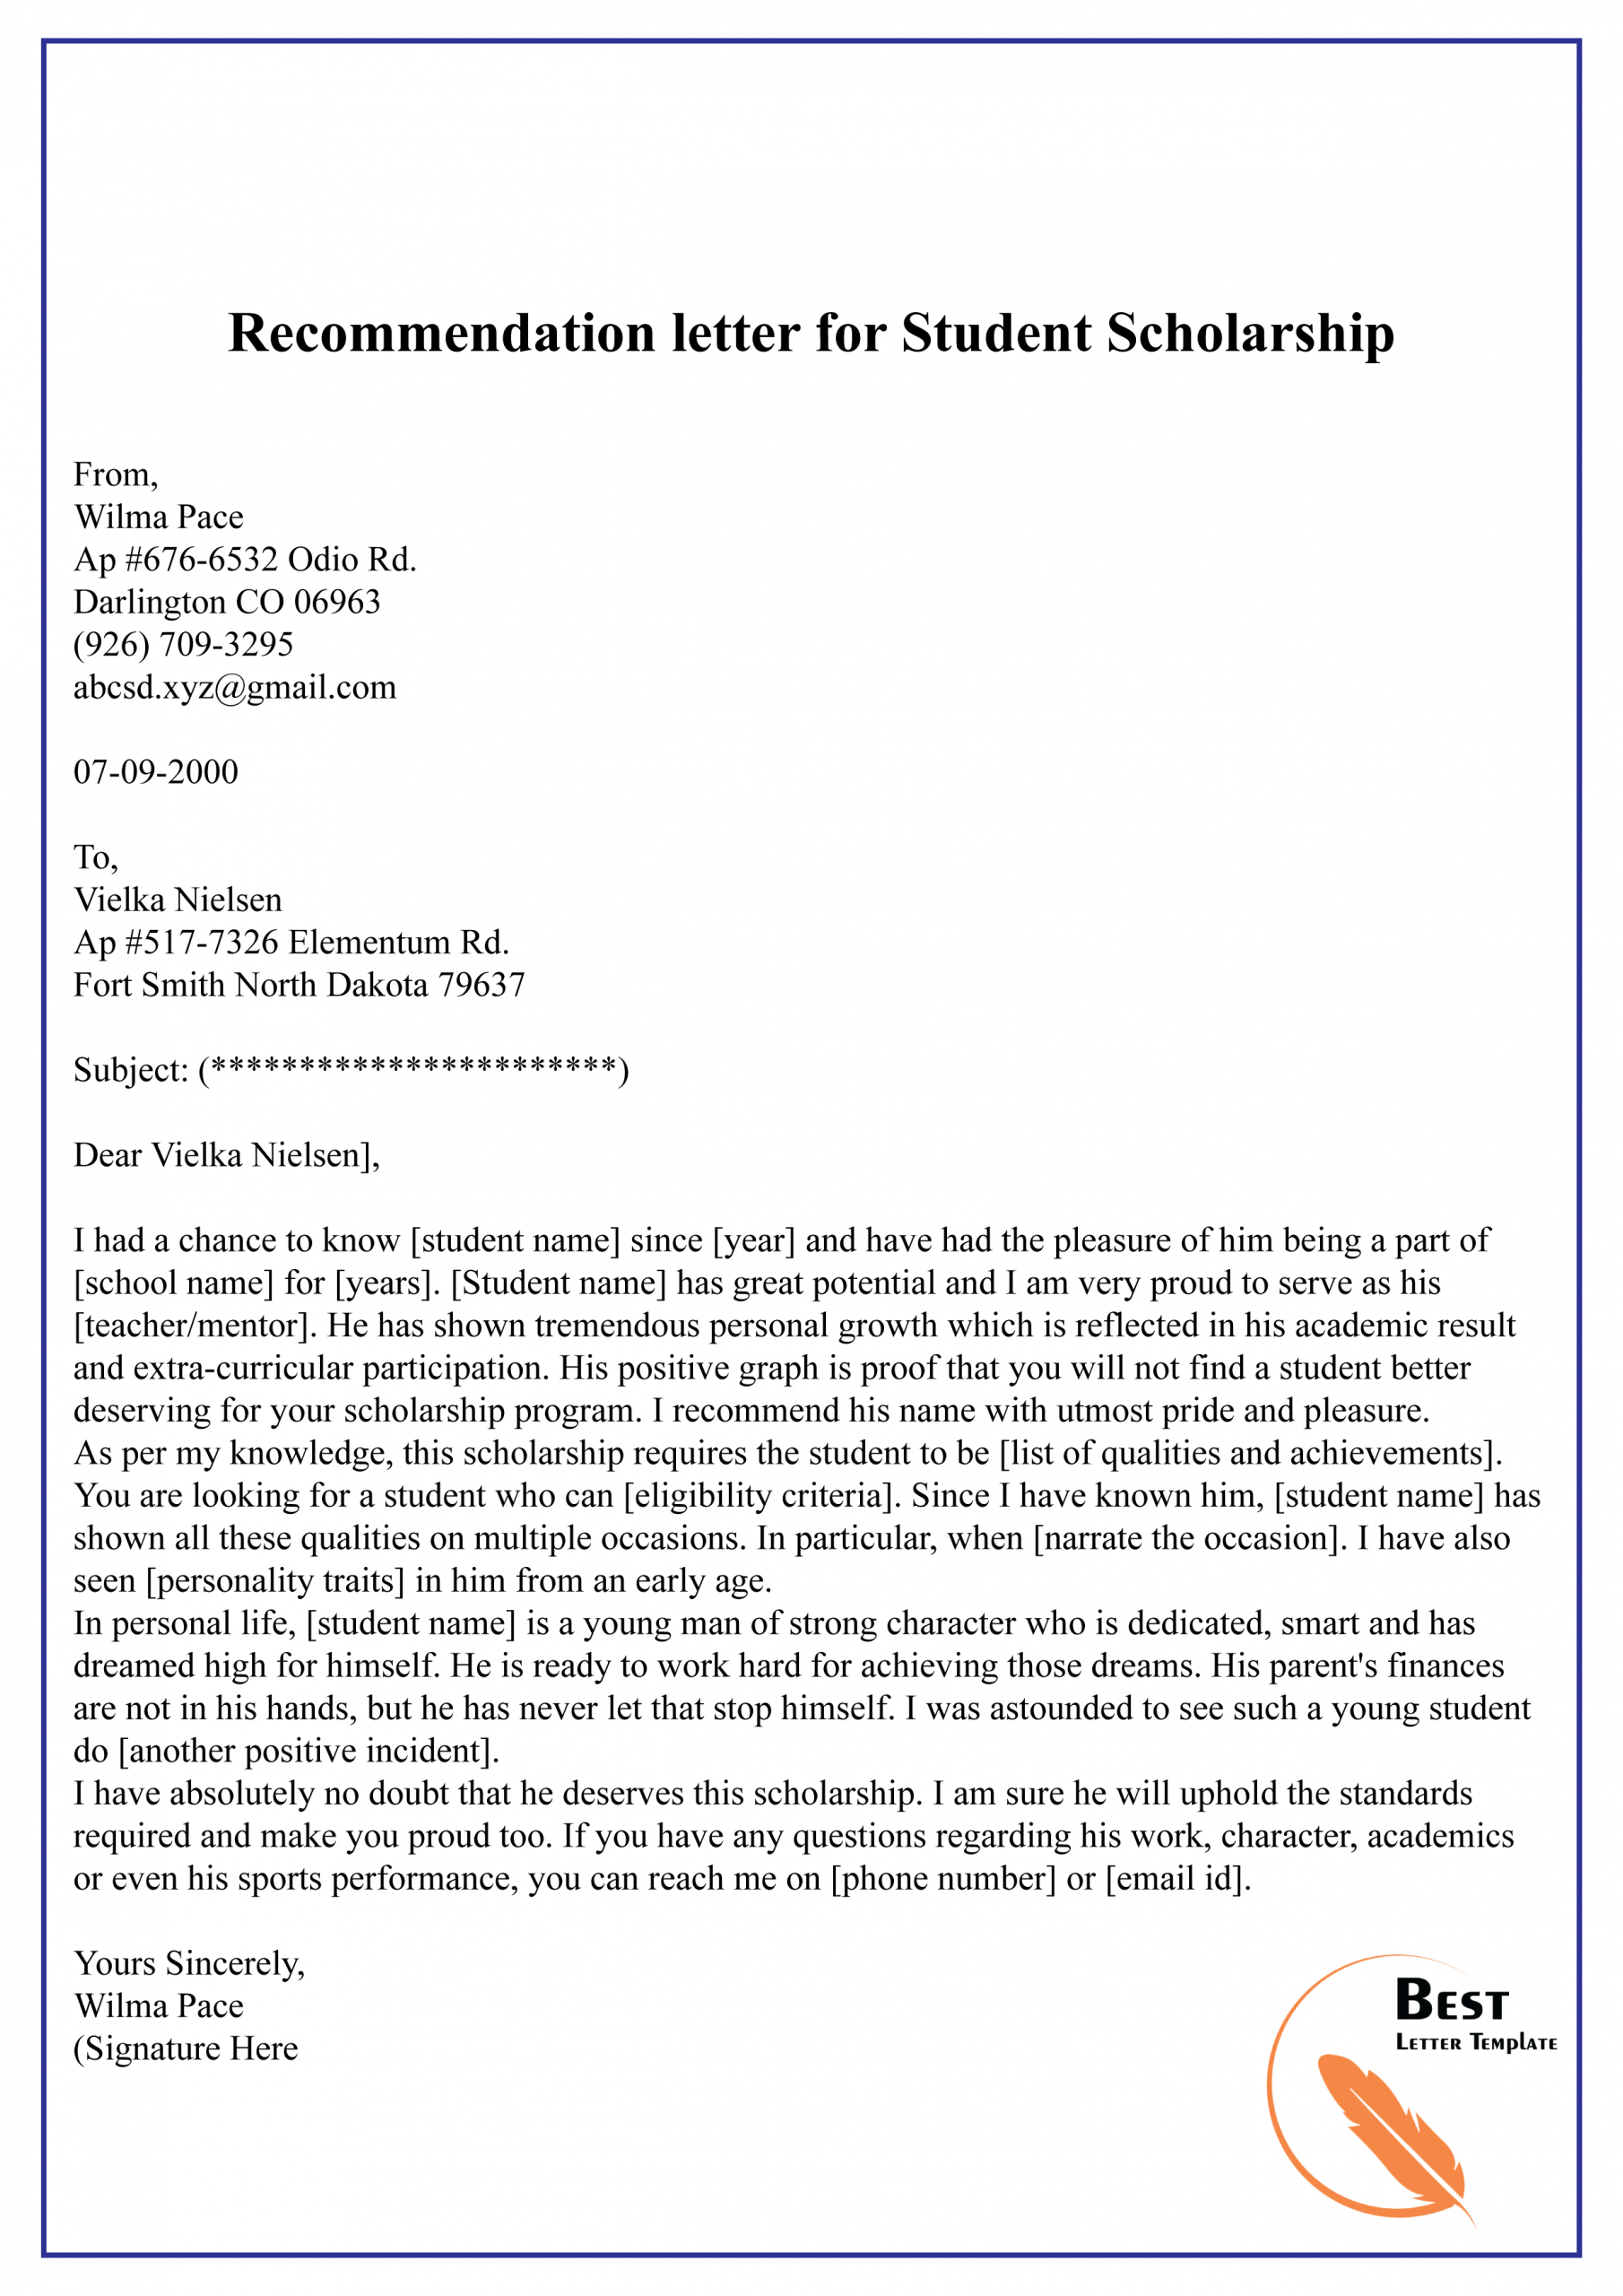 university-of-north-dakota-recommendation-letter-invitation-template